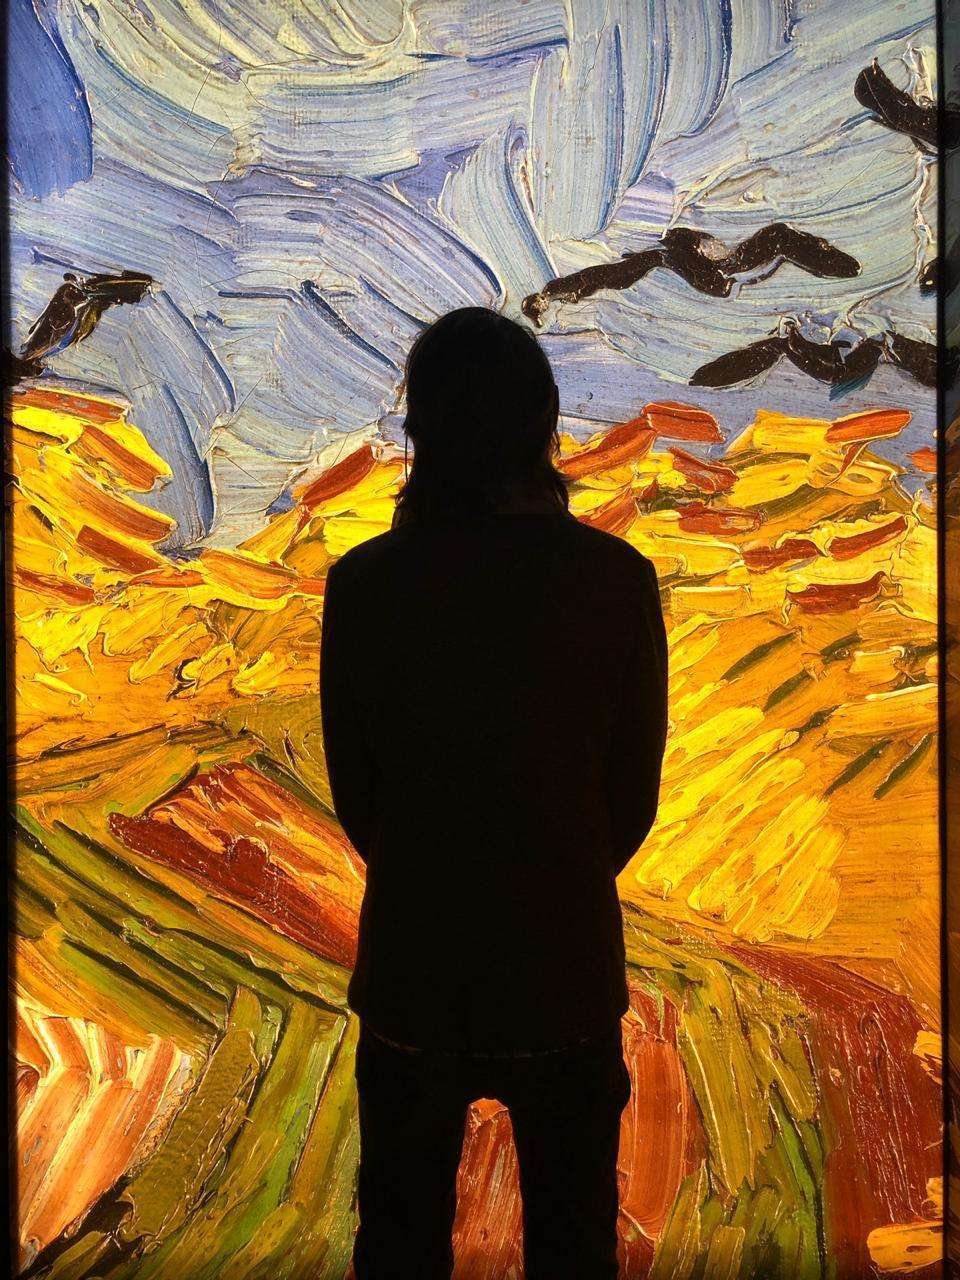 Meeting Vincent Van Gogh